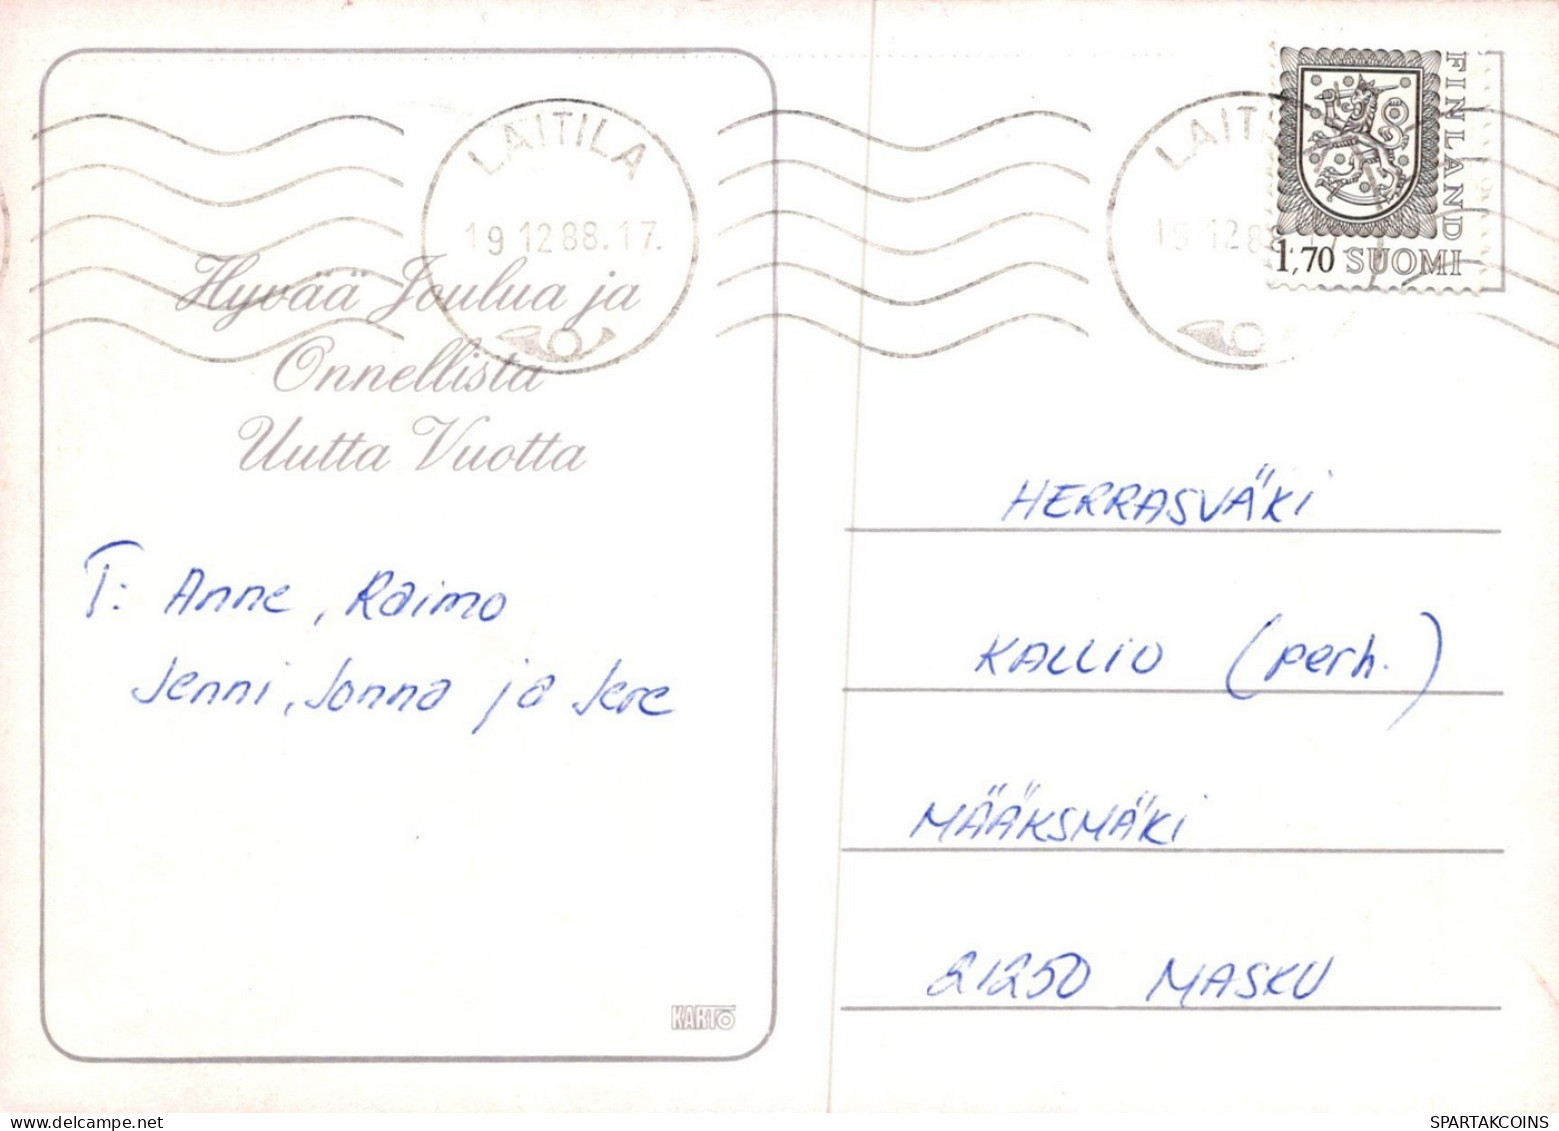 SANTA CLAUS CHRISTMAS Holidays Vintage Postcard CPSM #PAK913.GB - Santa Claus